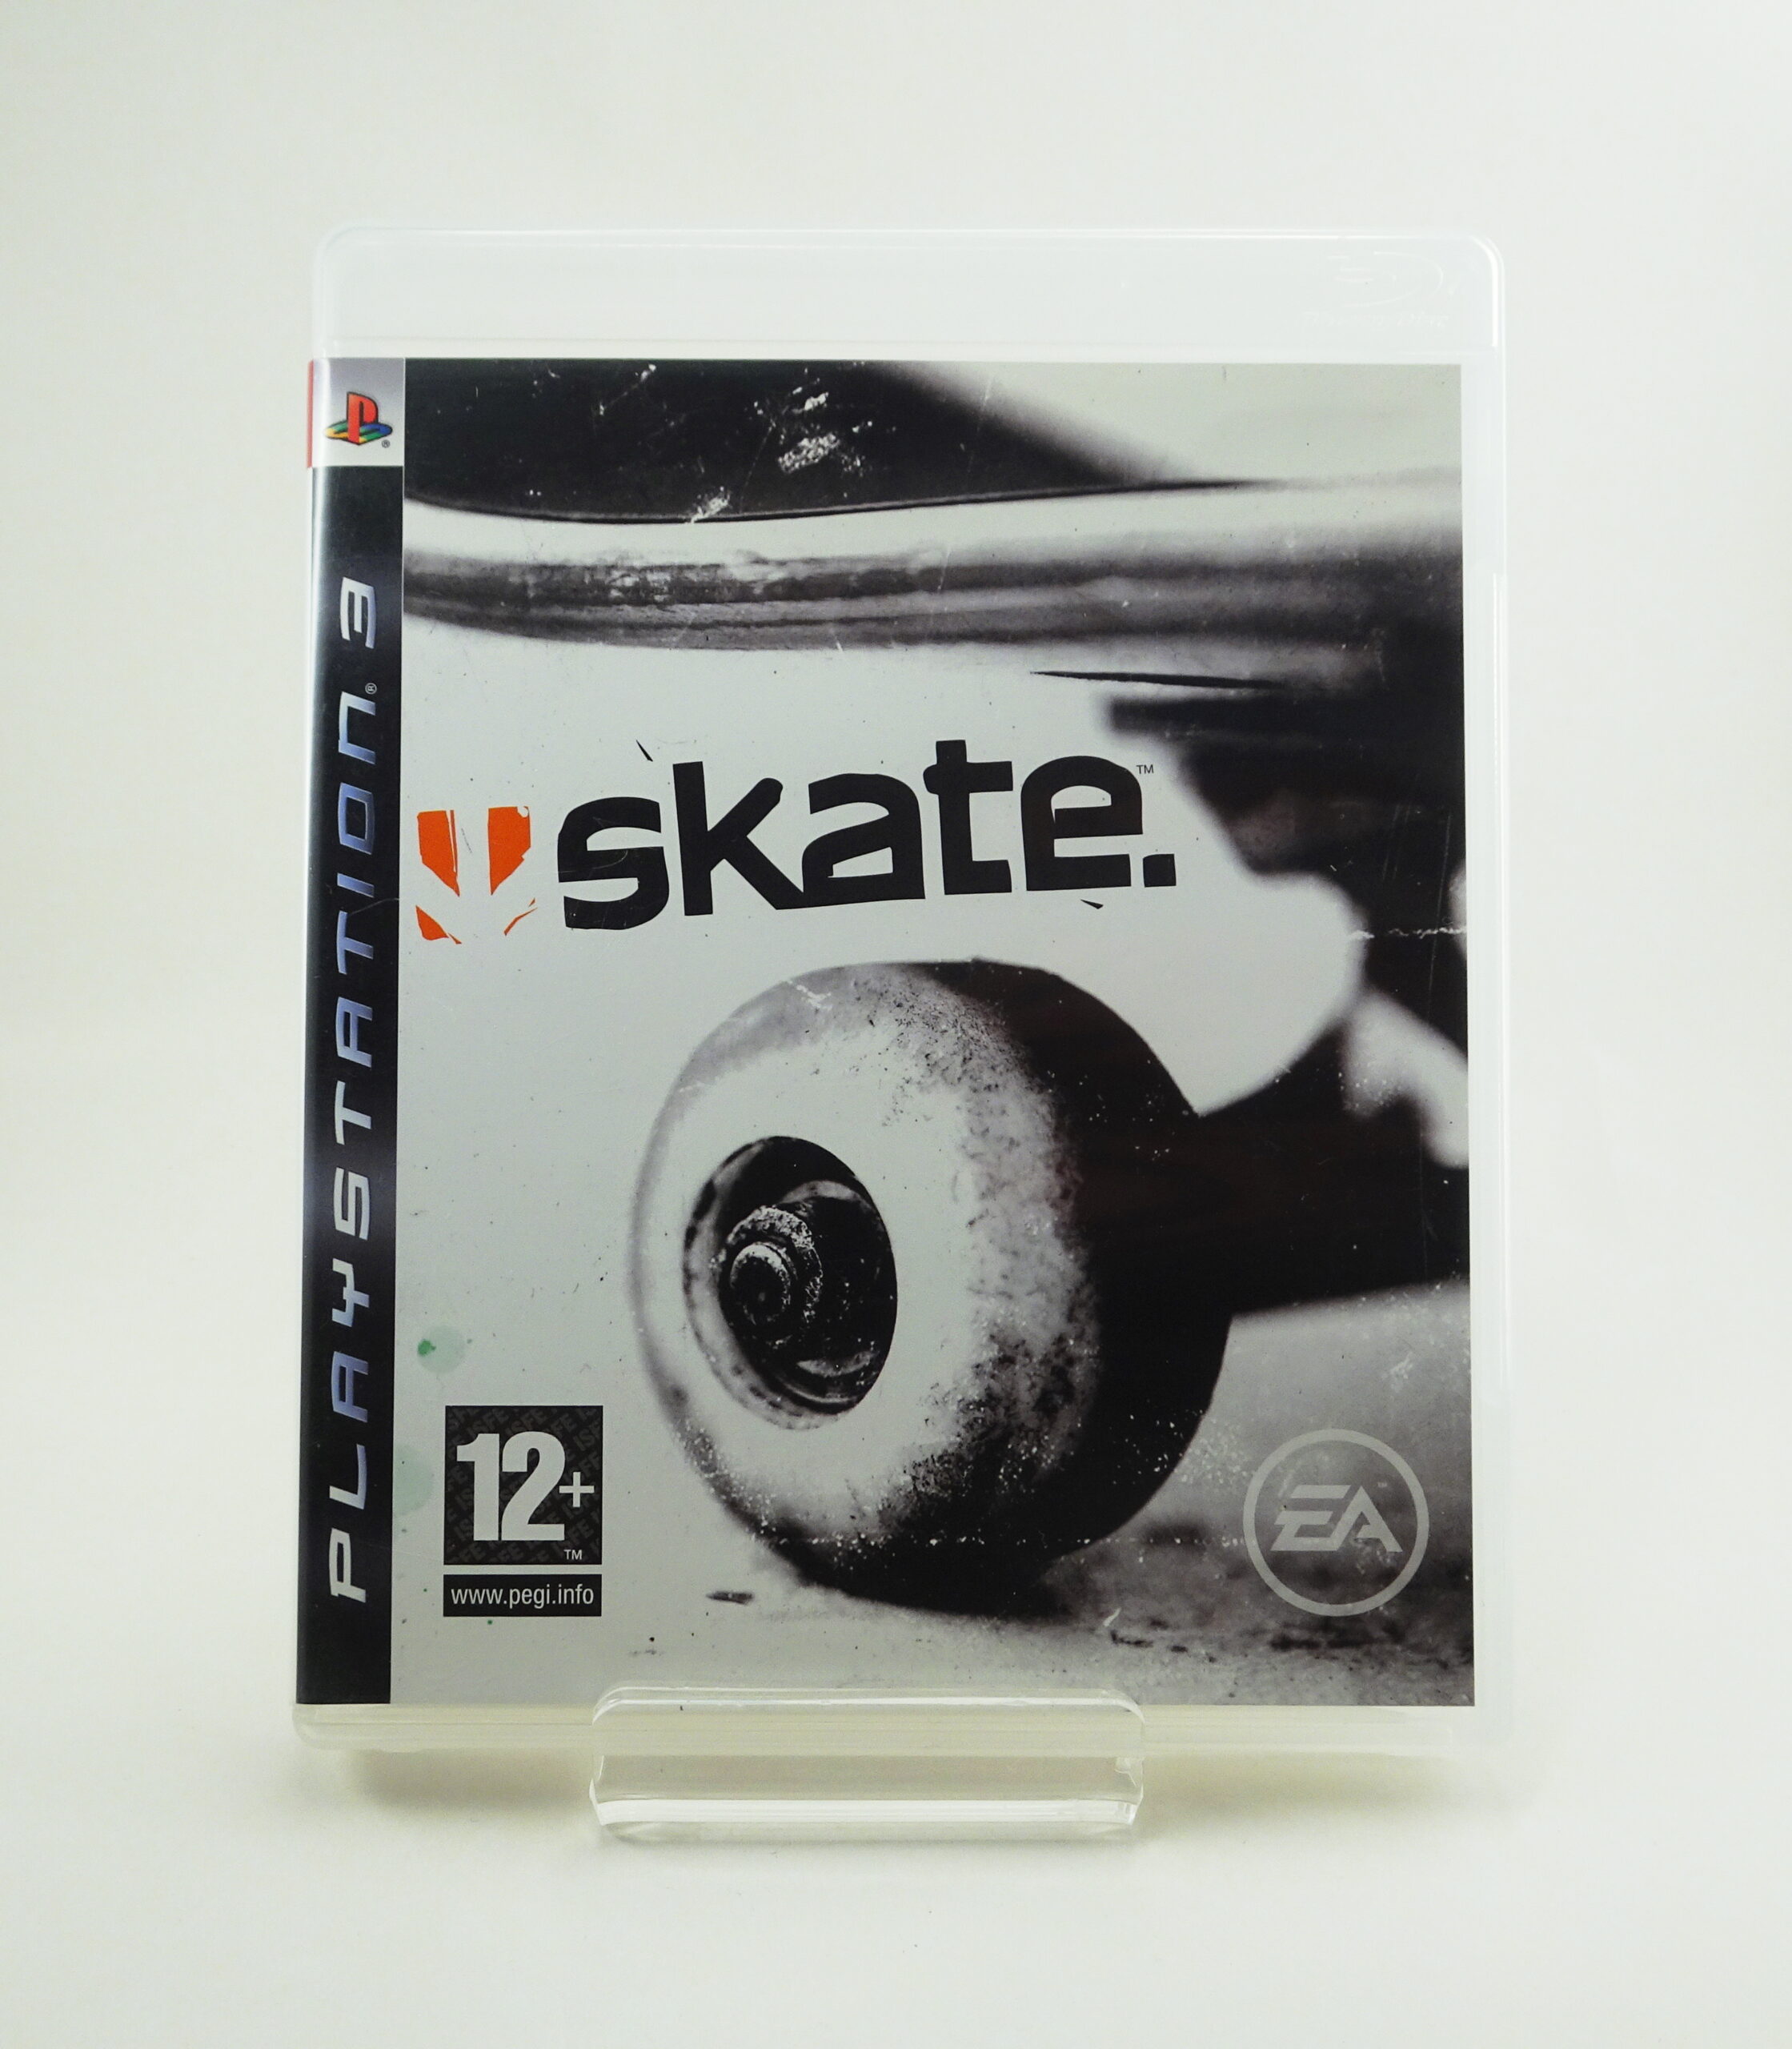 Skate (PS3)